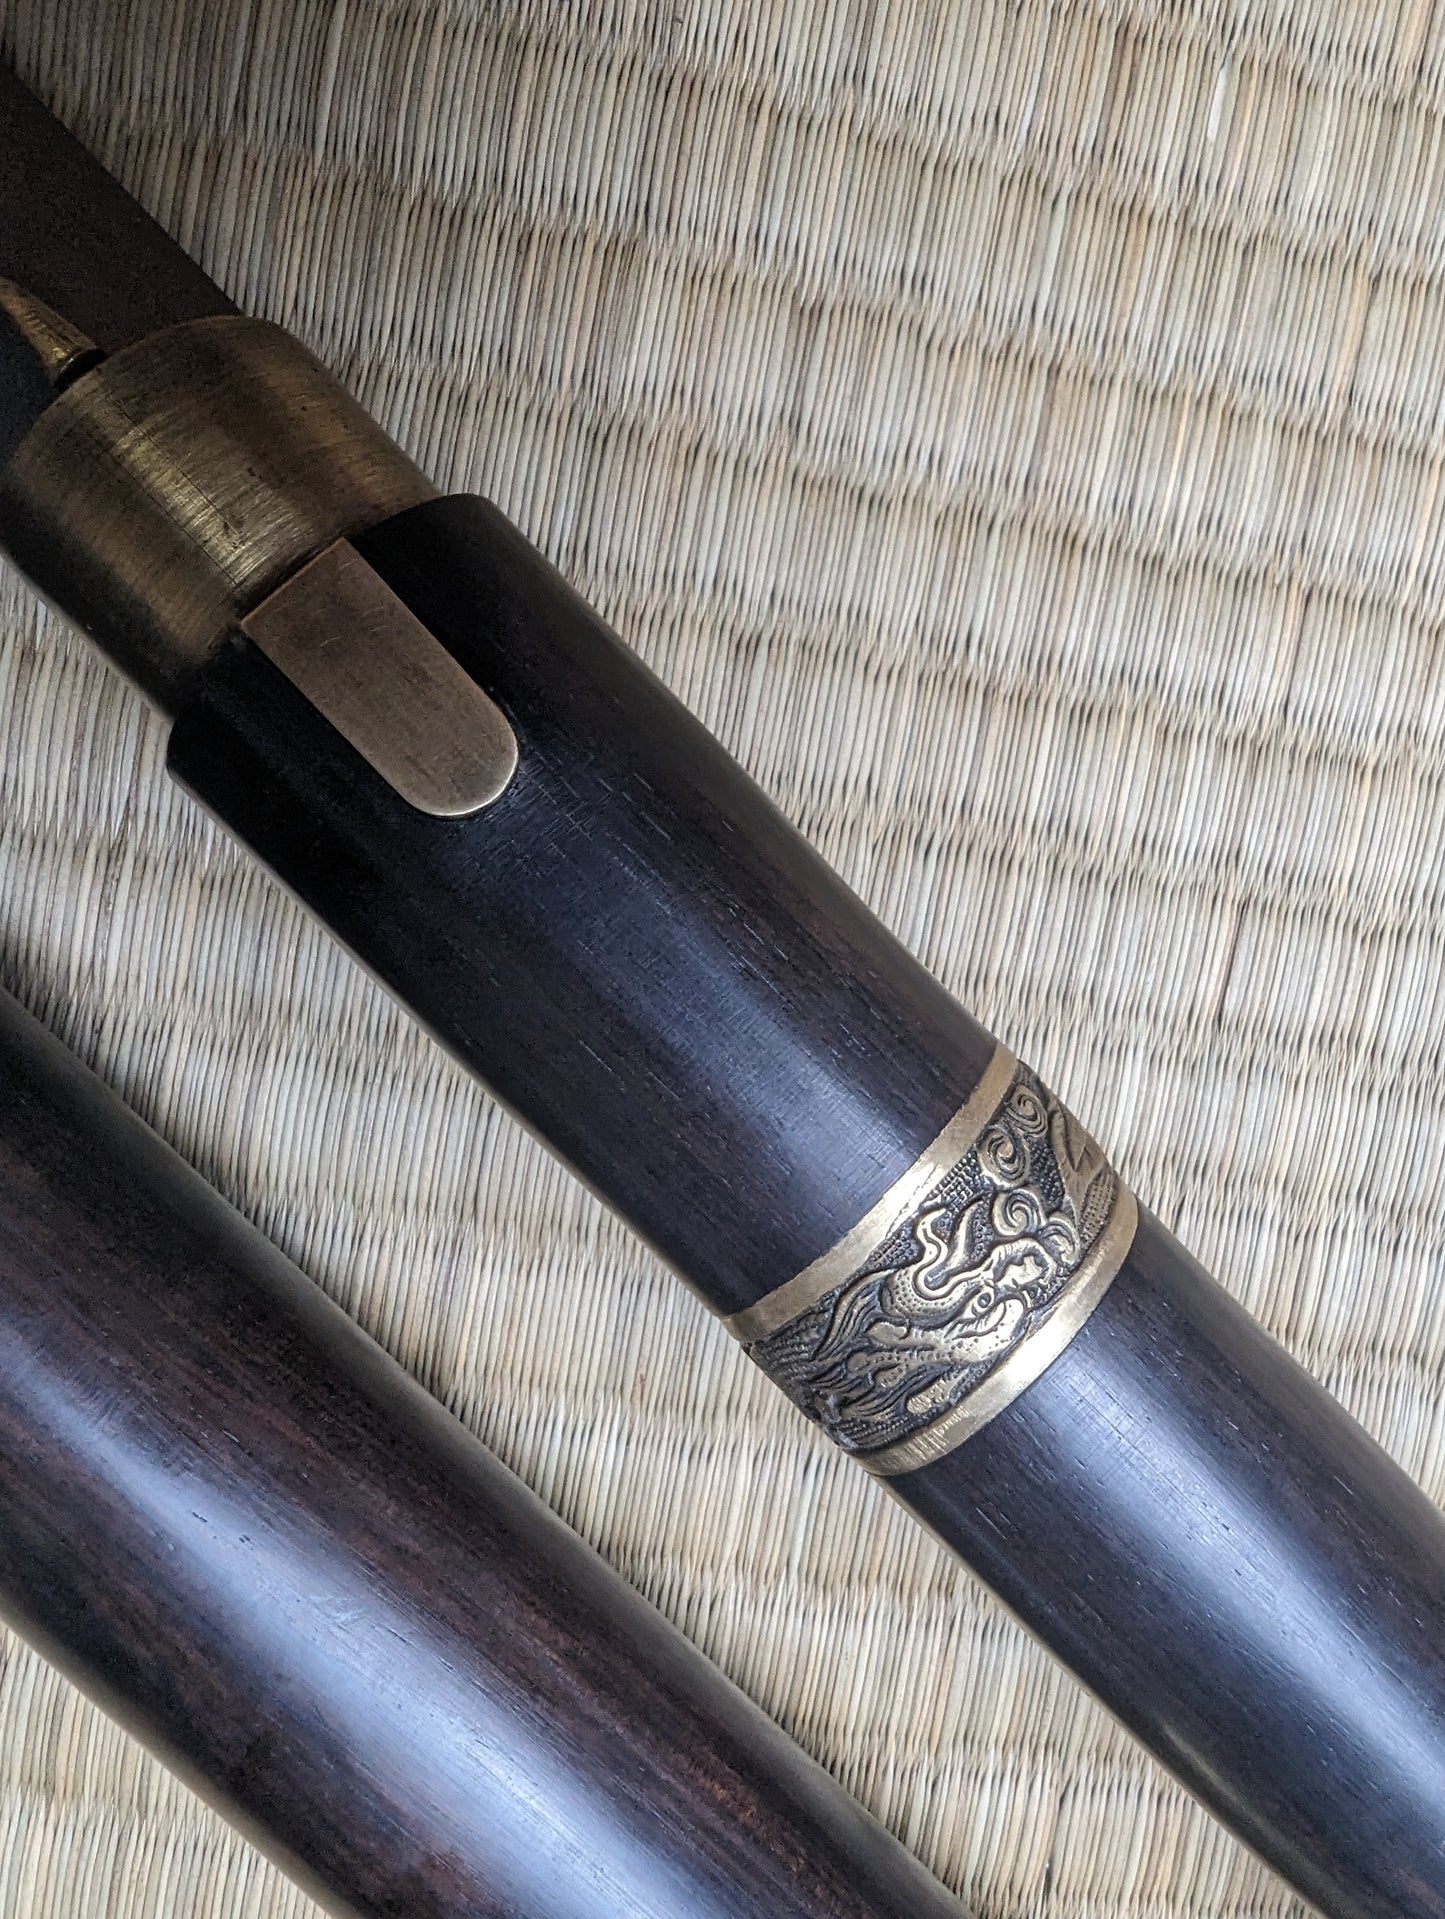 Cane Sword, Brass fittings, brass handle